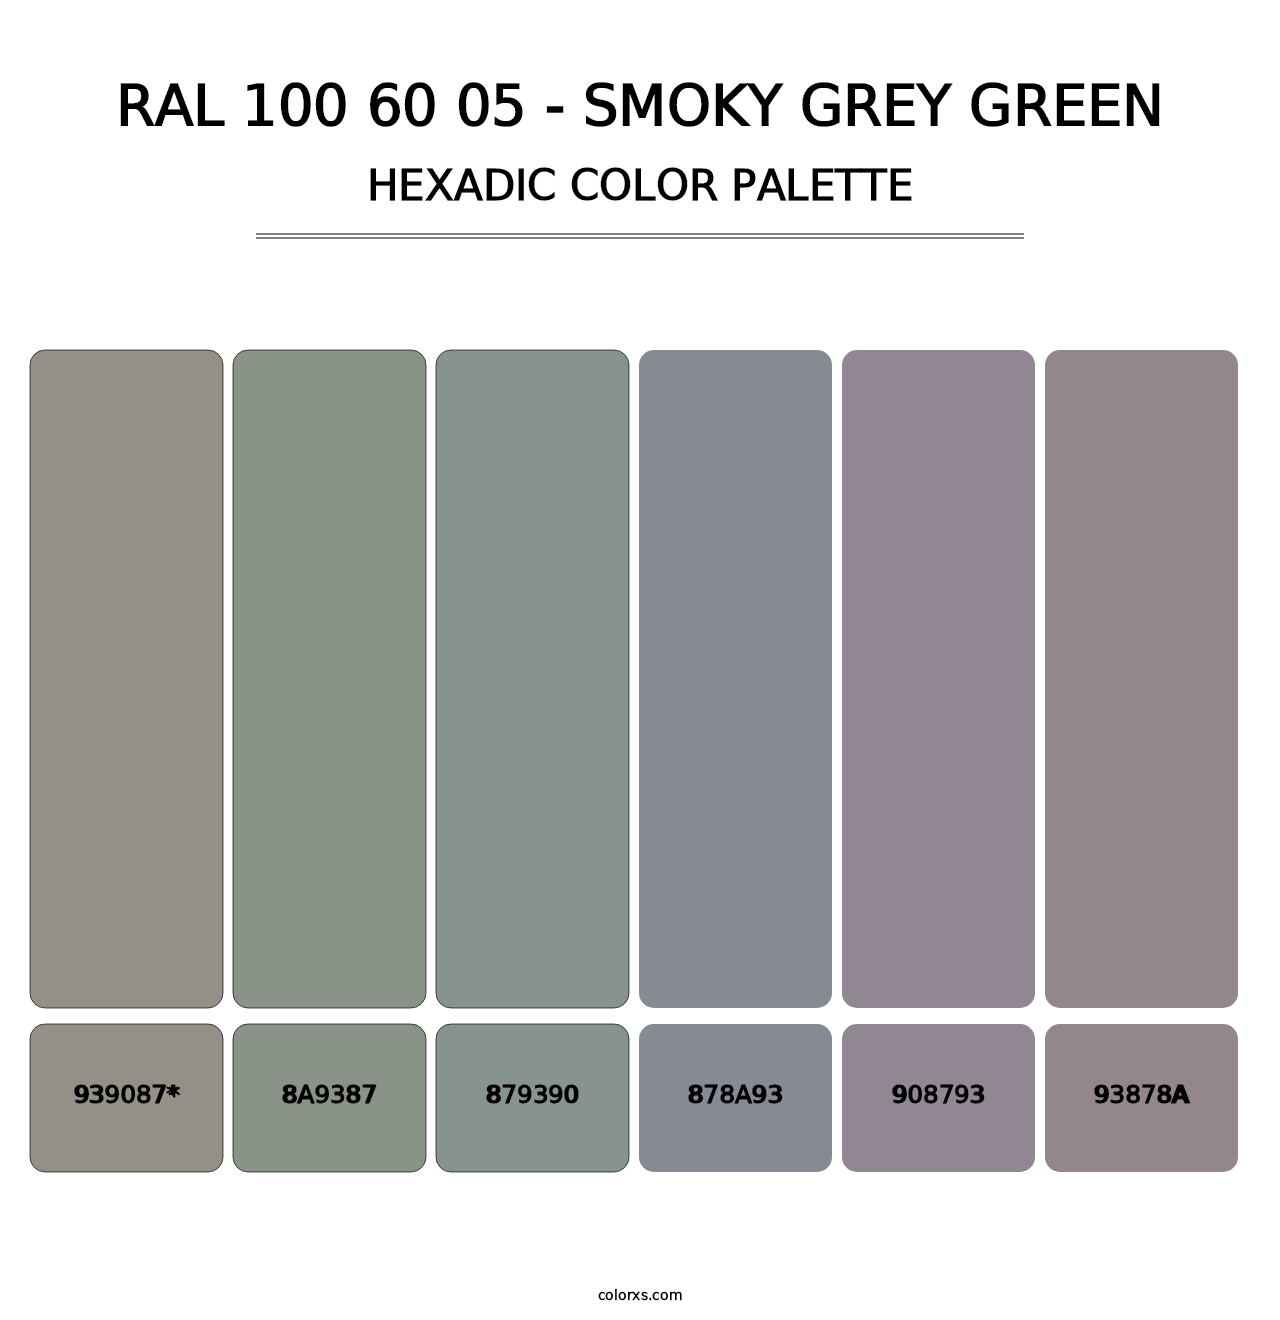 RAL 100 60 05 - Smoky Grey Green - Hexadic Color Palette